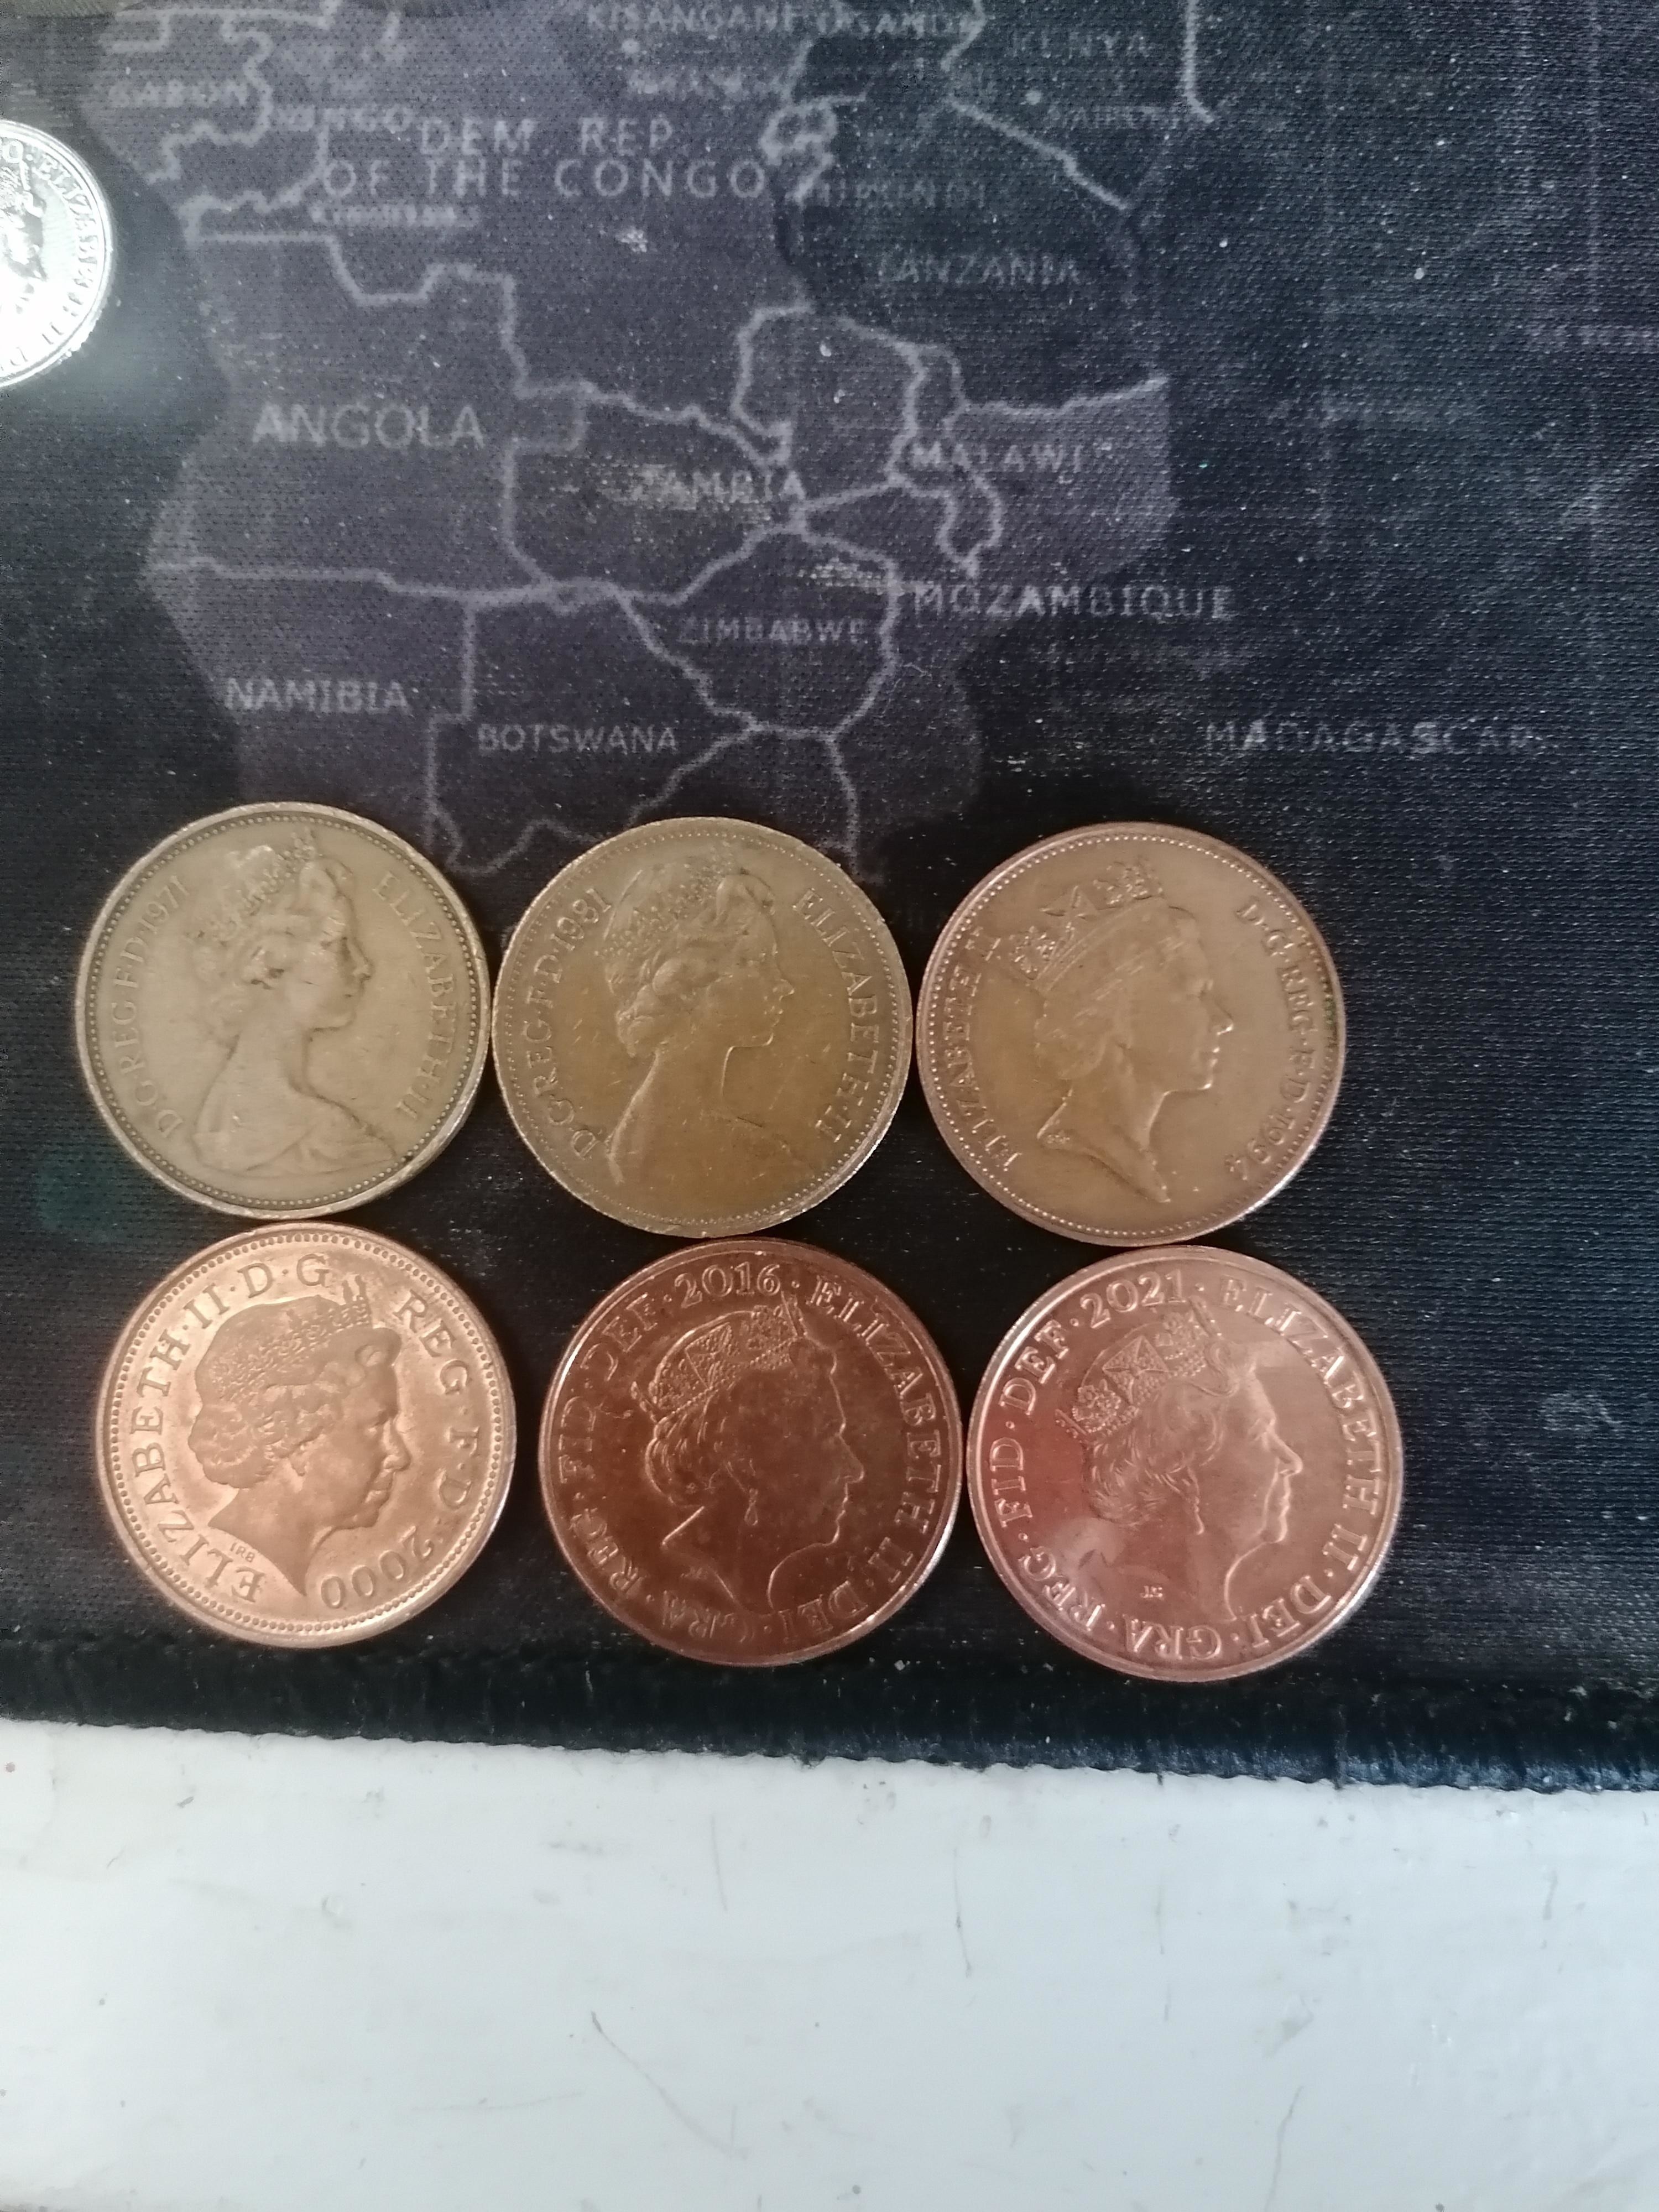 Coins with Queen Elizabeth&#x27;s image